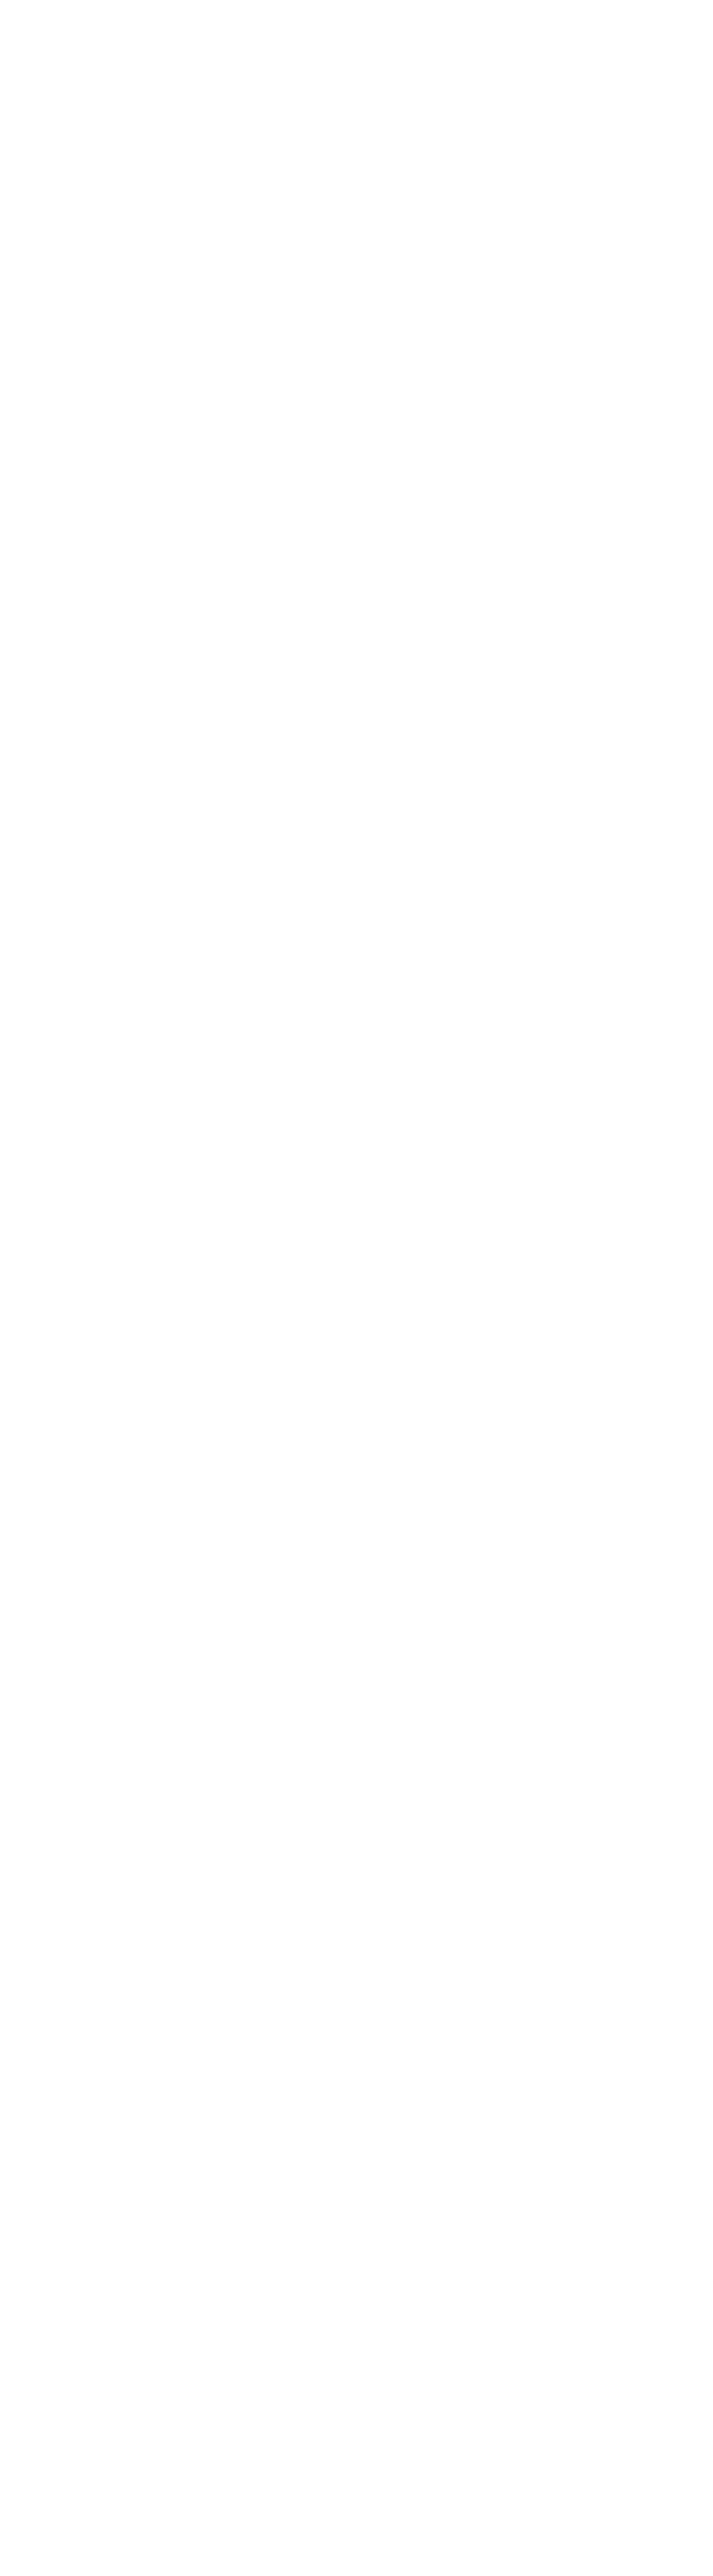 man suit logo